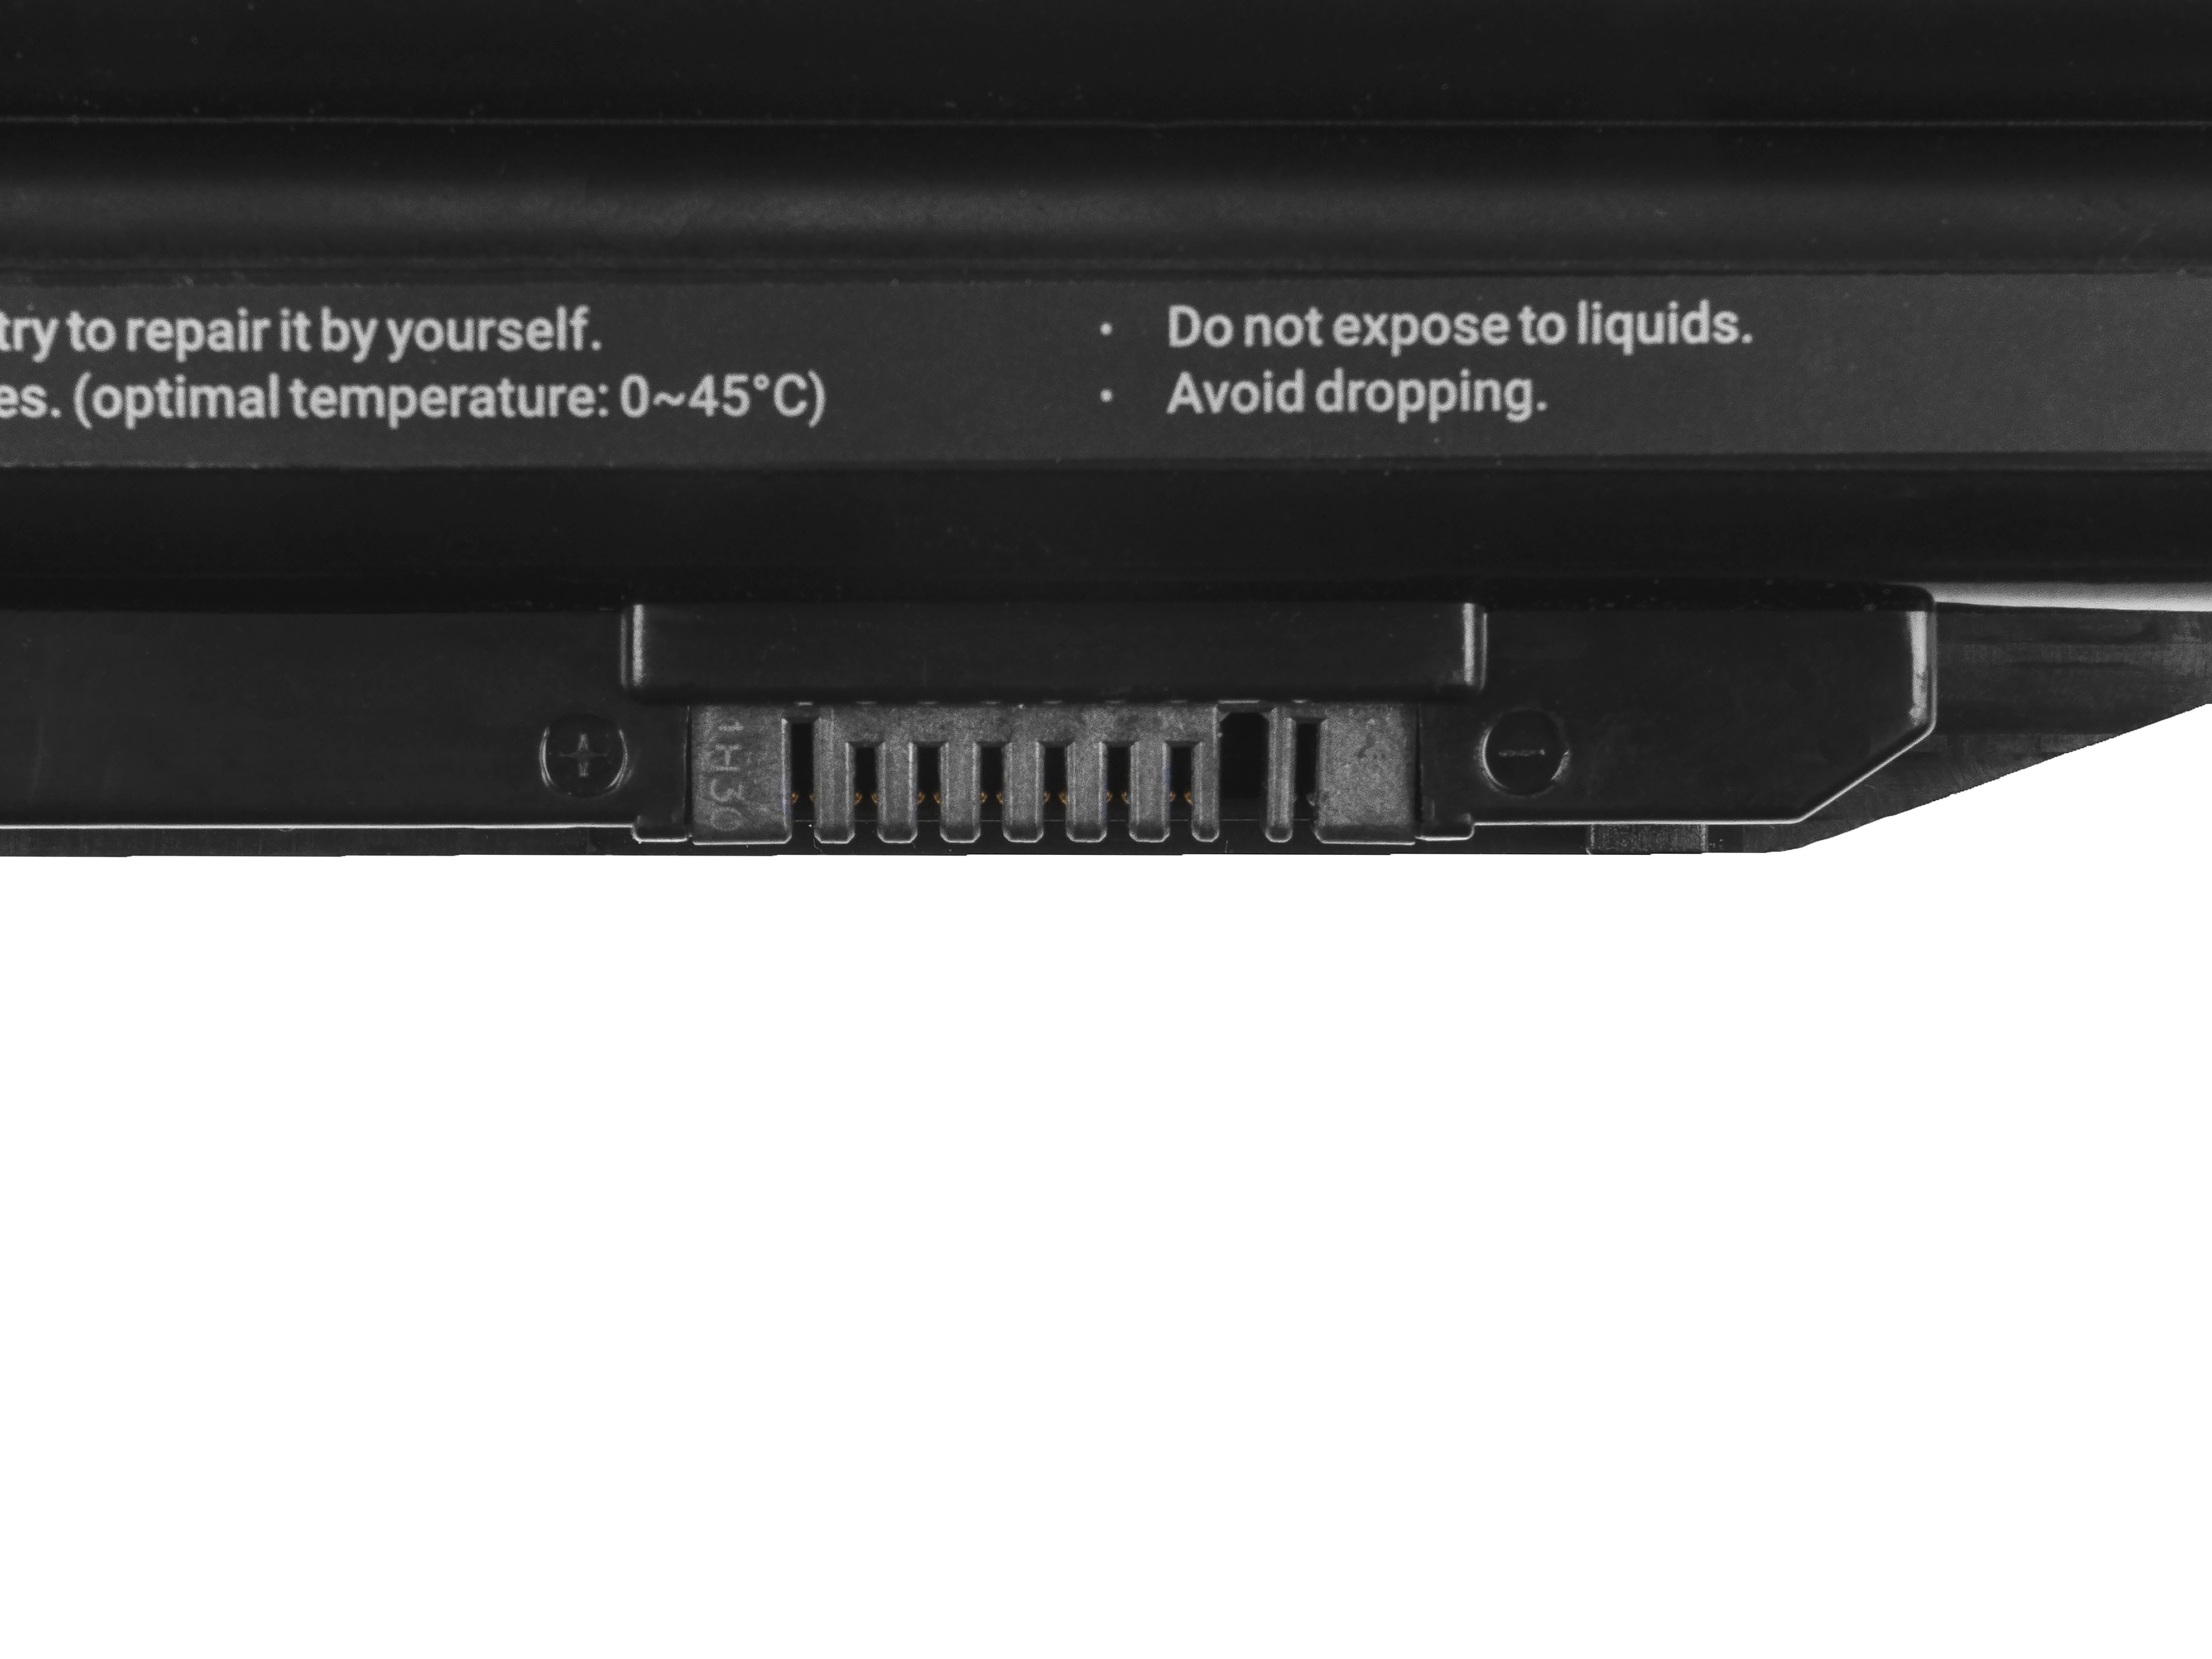 Laptop batteri Green Cell til Fujitsu LifeBook A514 A544 A555 AH544